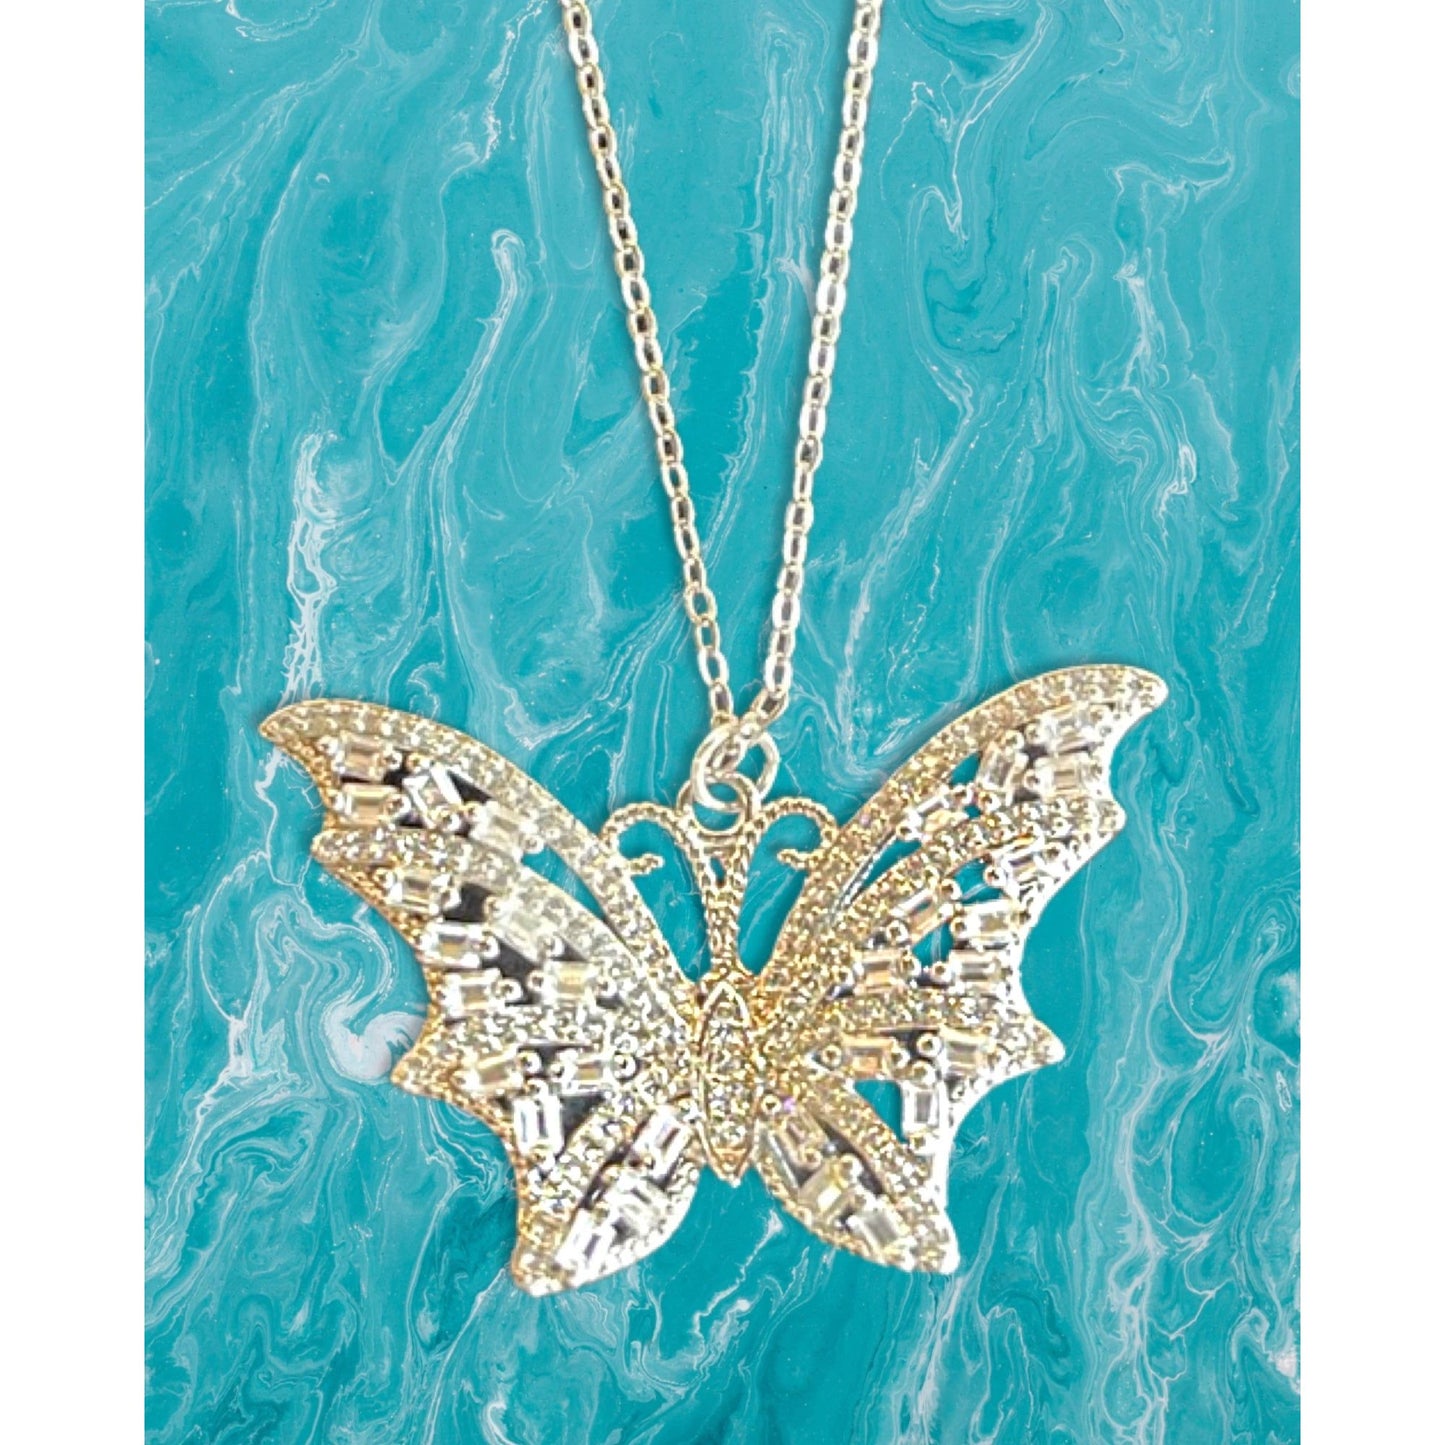 Butterfly Bling - Silver